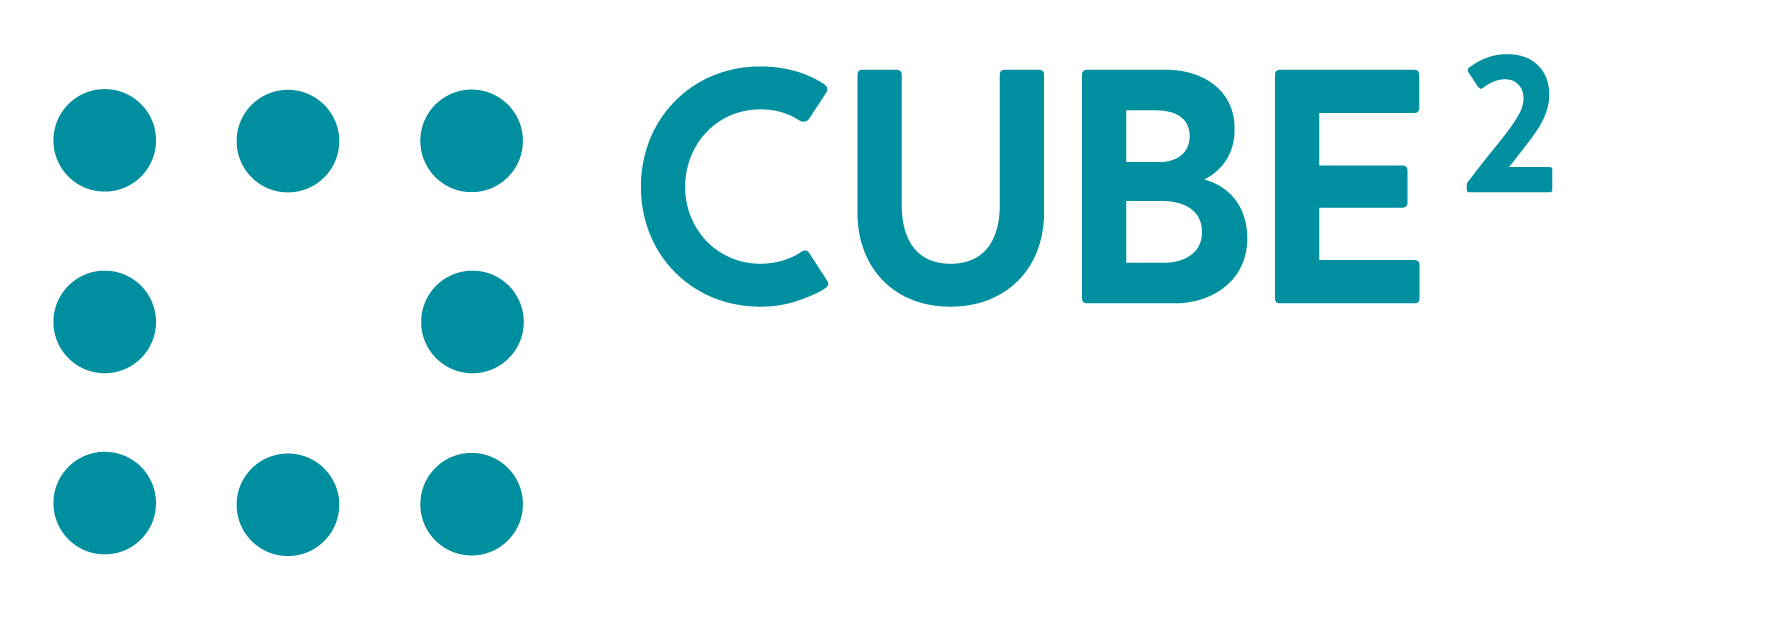 Logo Cube2